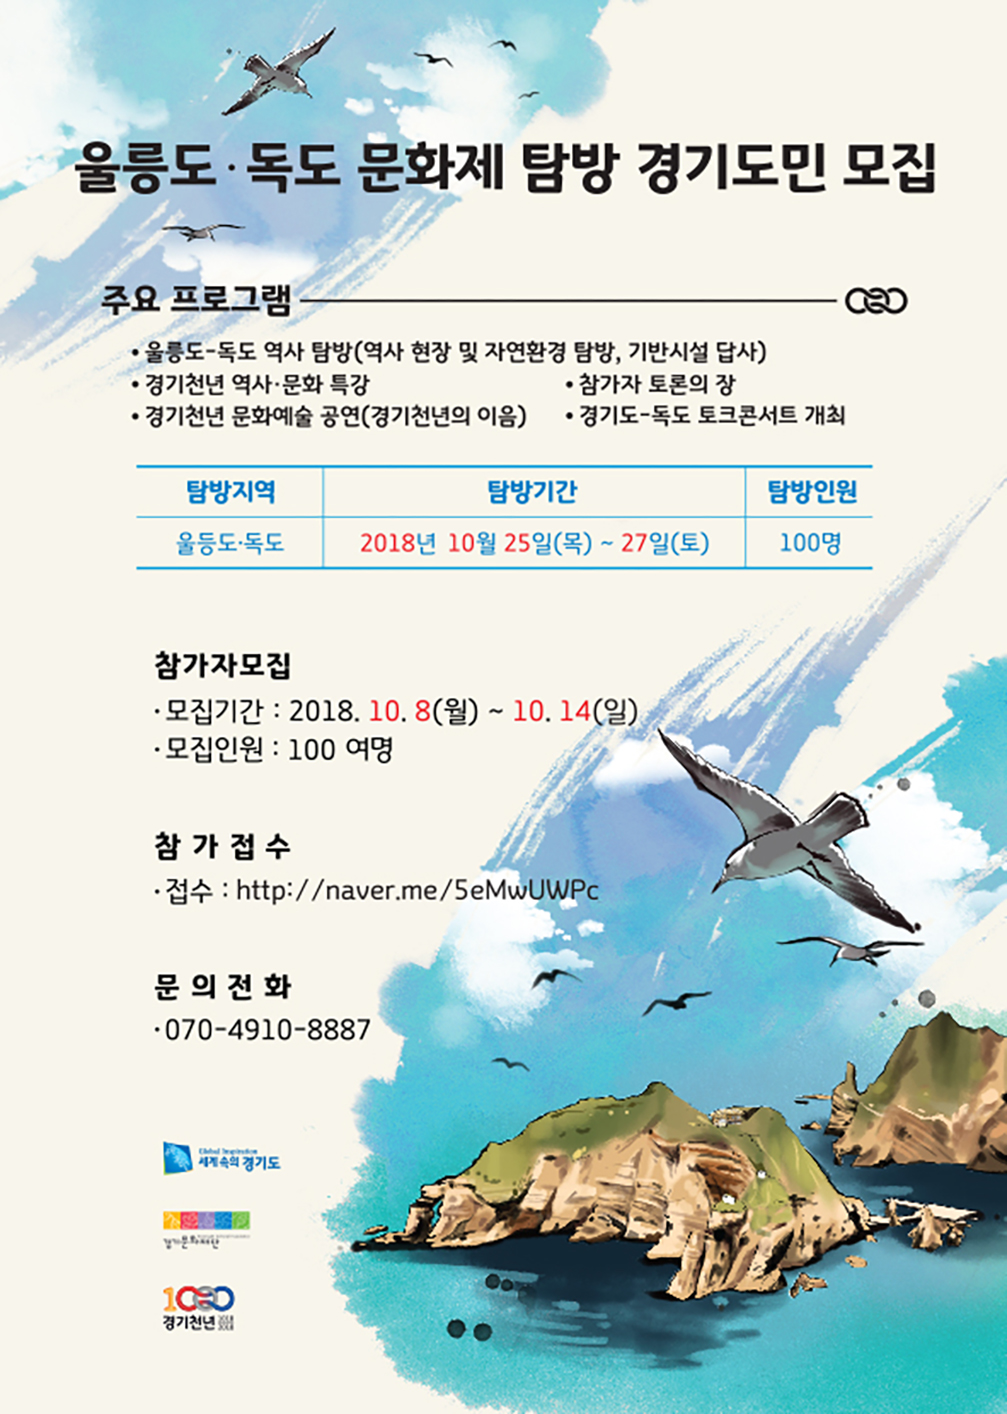 Recruiting local residents of Gyeonggi Province for ‘Gyeonggi Millenium Ulleungdo Island • Dokdo Island Culture Festival’